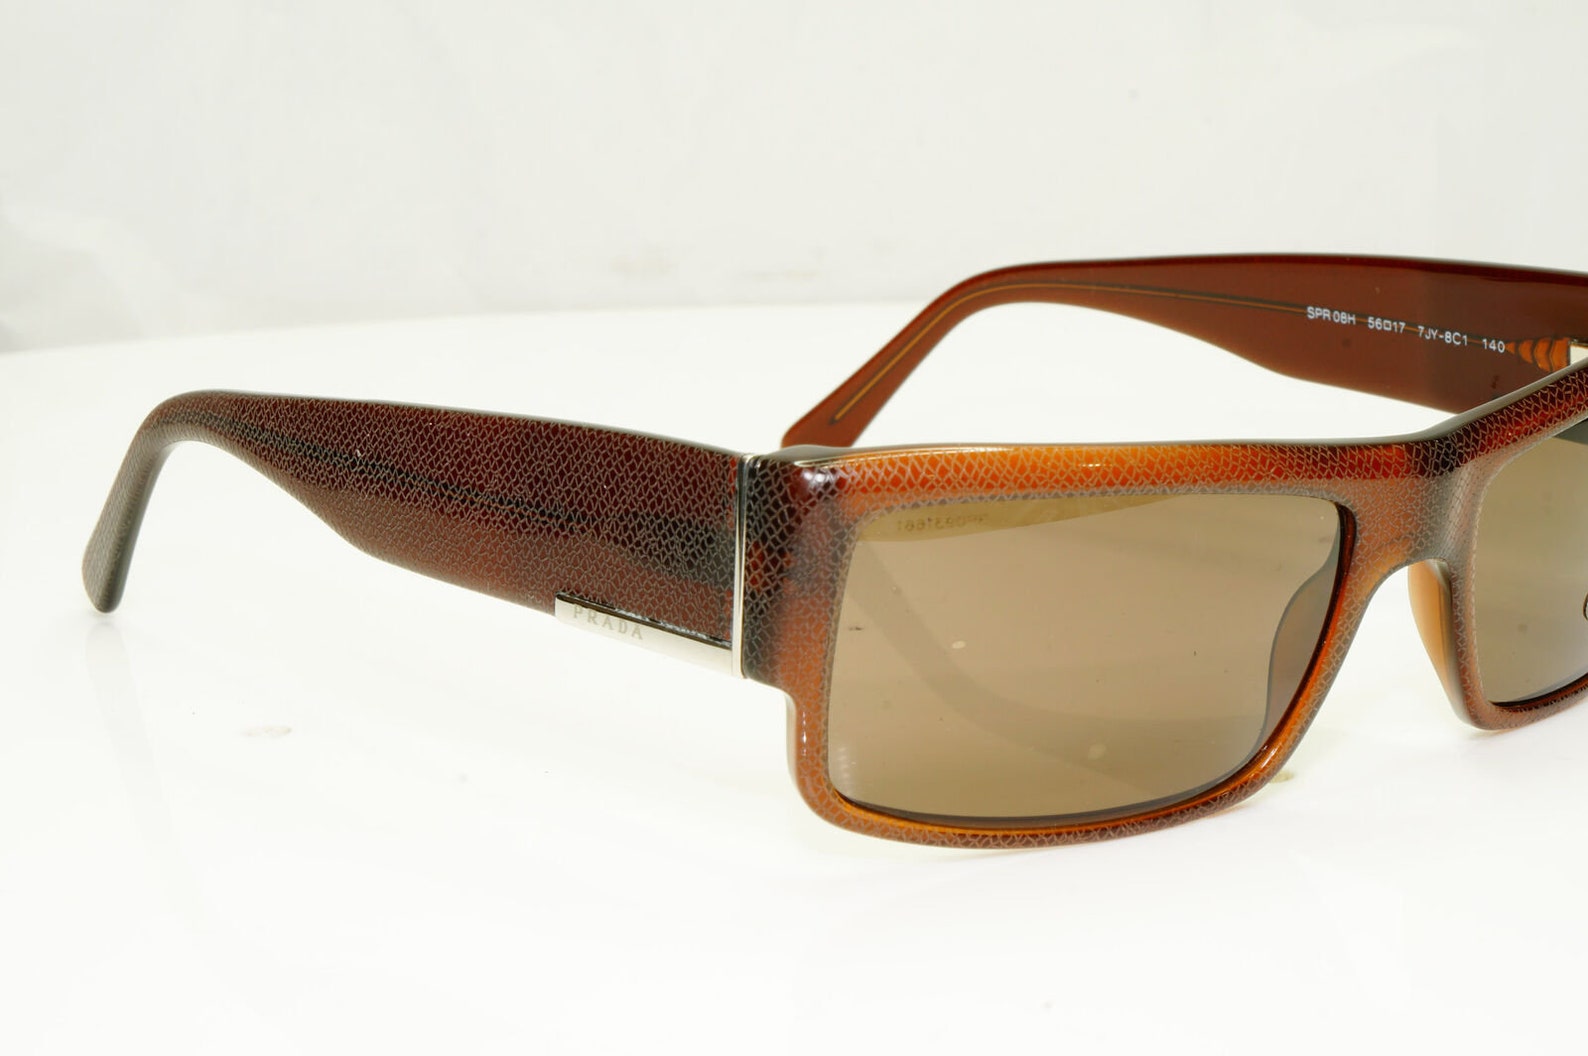 Authentic Prada Mens Vintage Sunglasses Brown Spr 08h 7jy-8c1 | Etsy